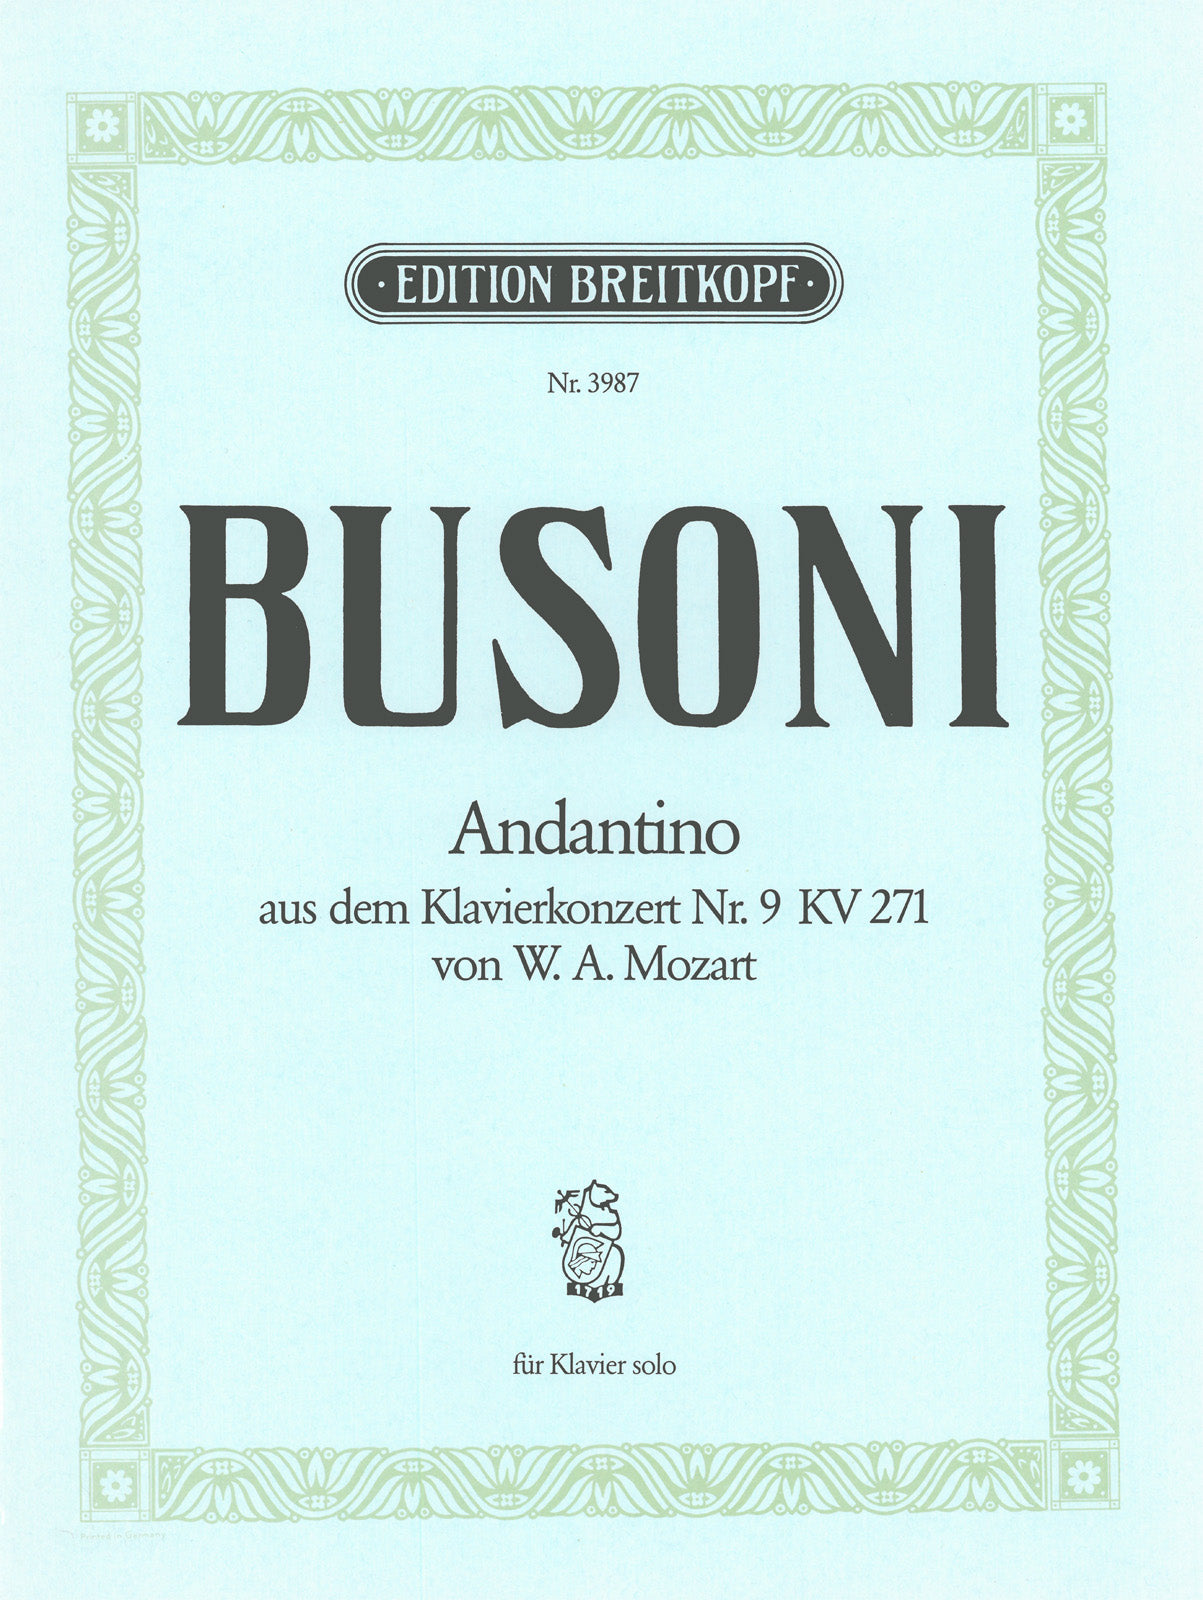 Mozart-Busoni: Andantino from Piano Concerto No. 9